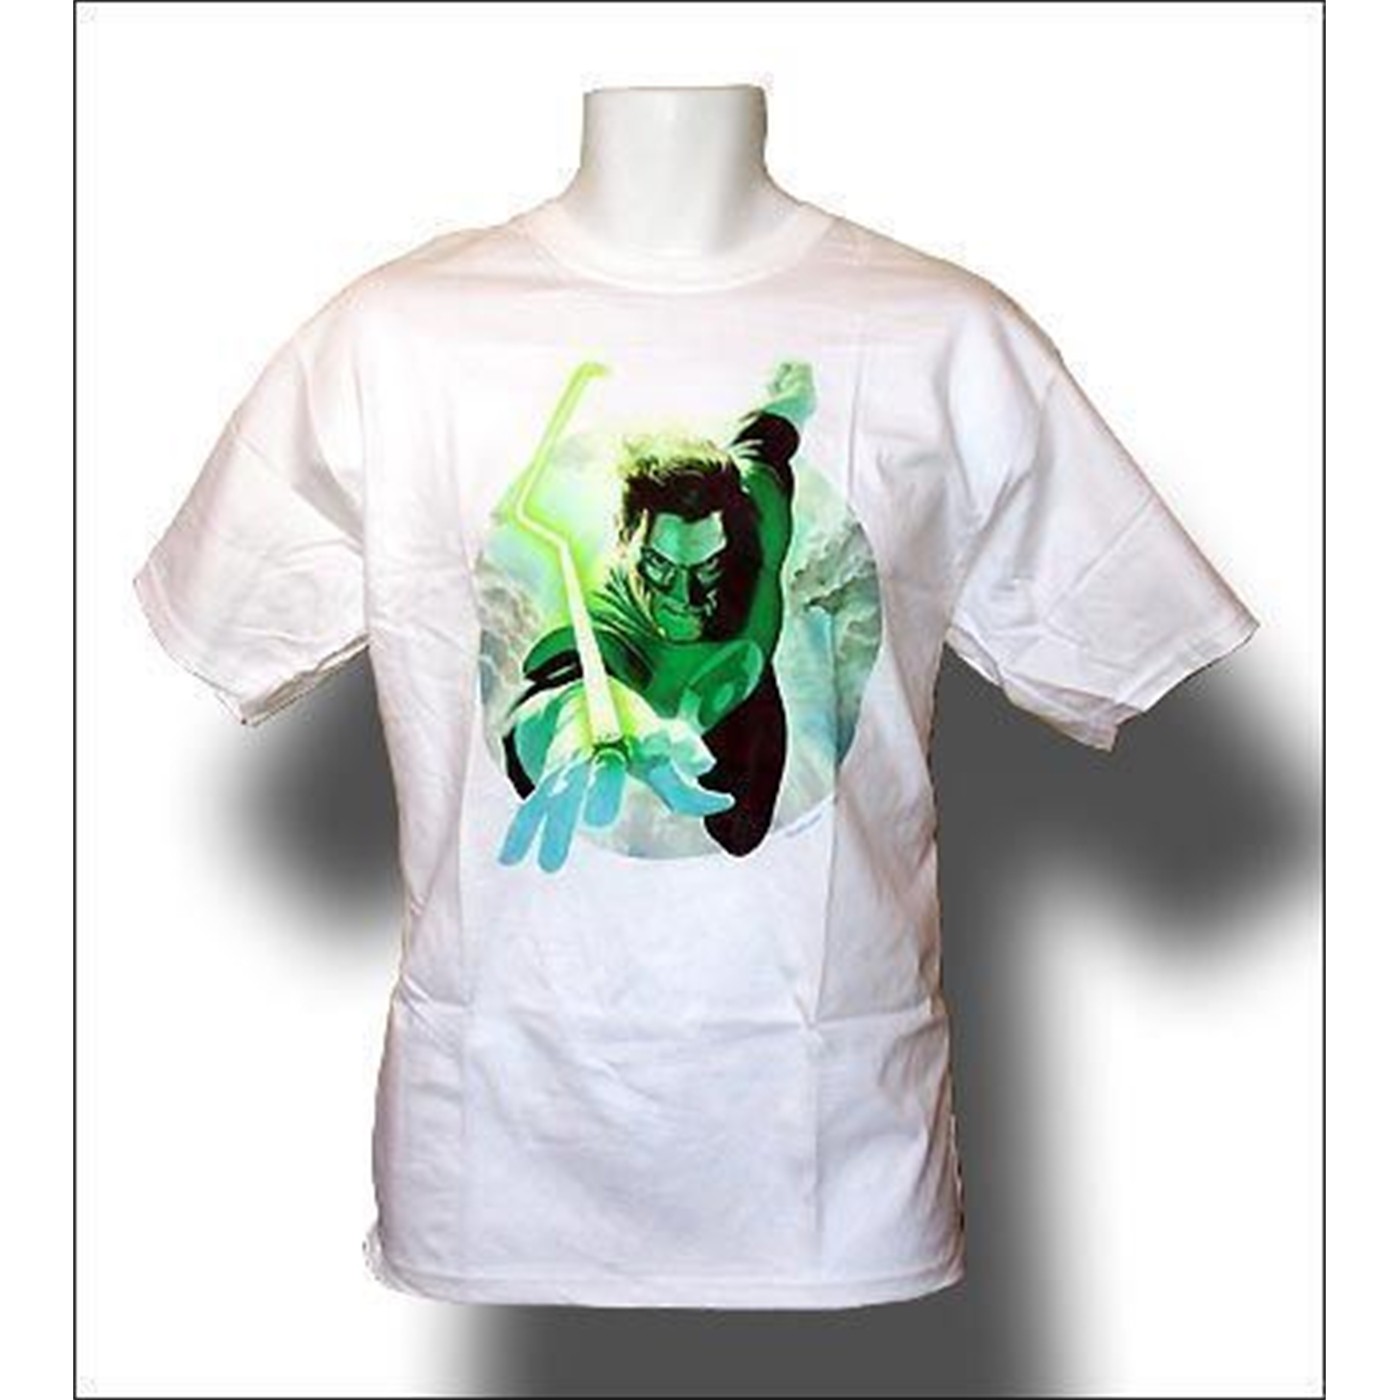 Green Lantern Ring T-Shirt by Alex Ross